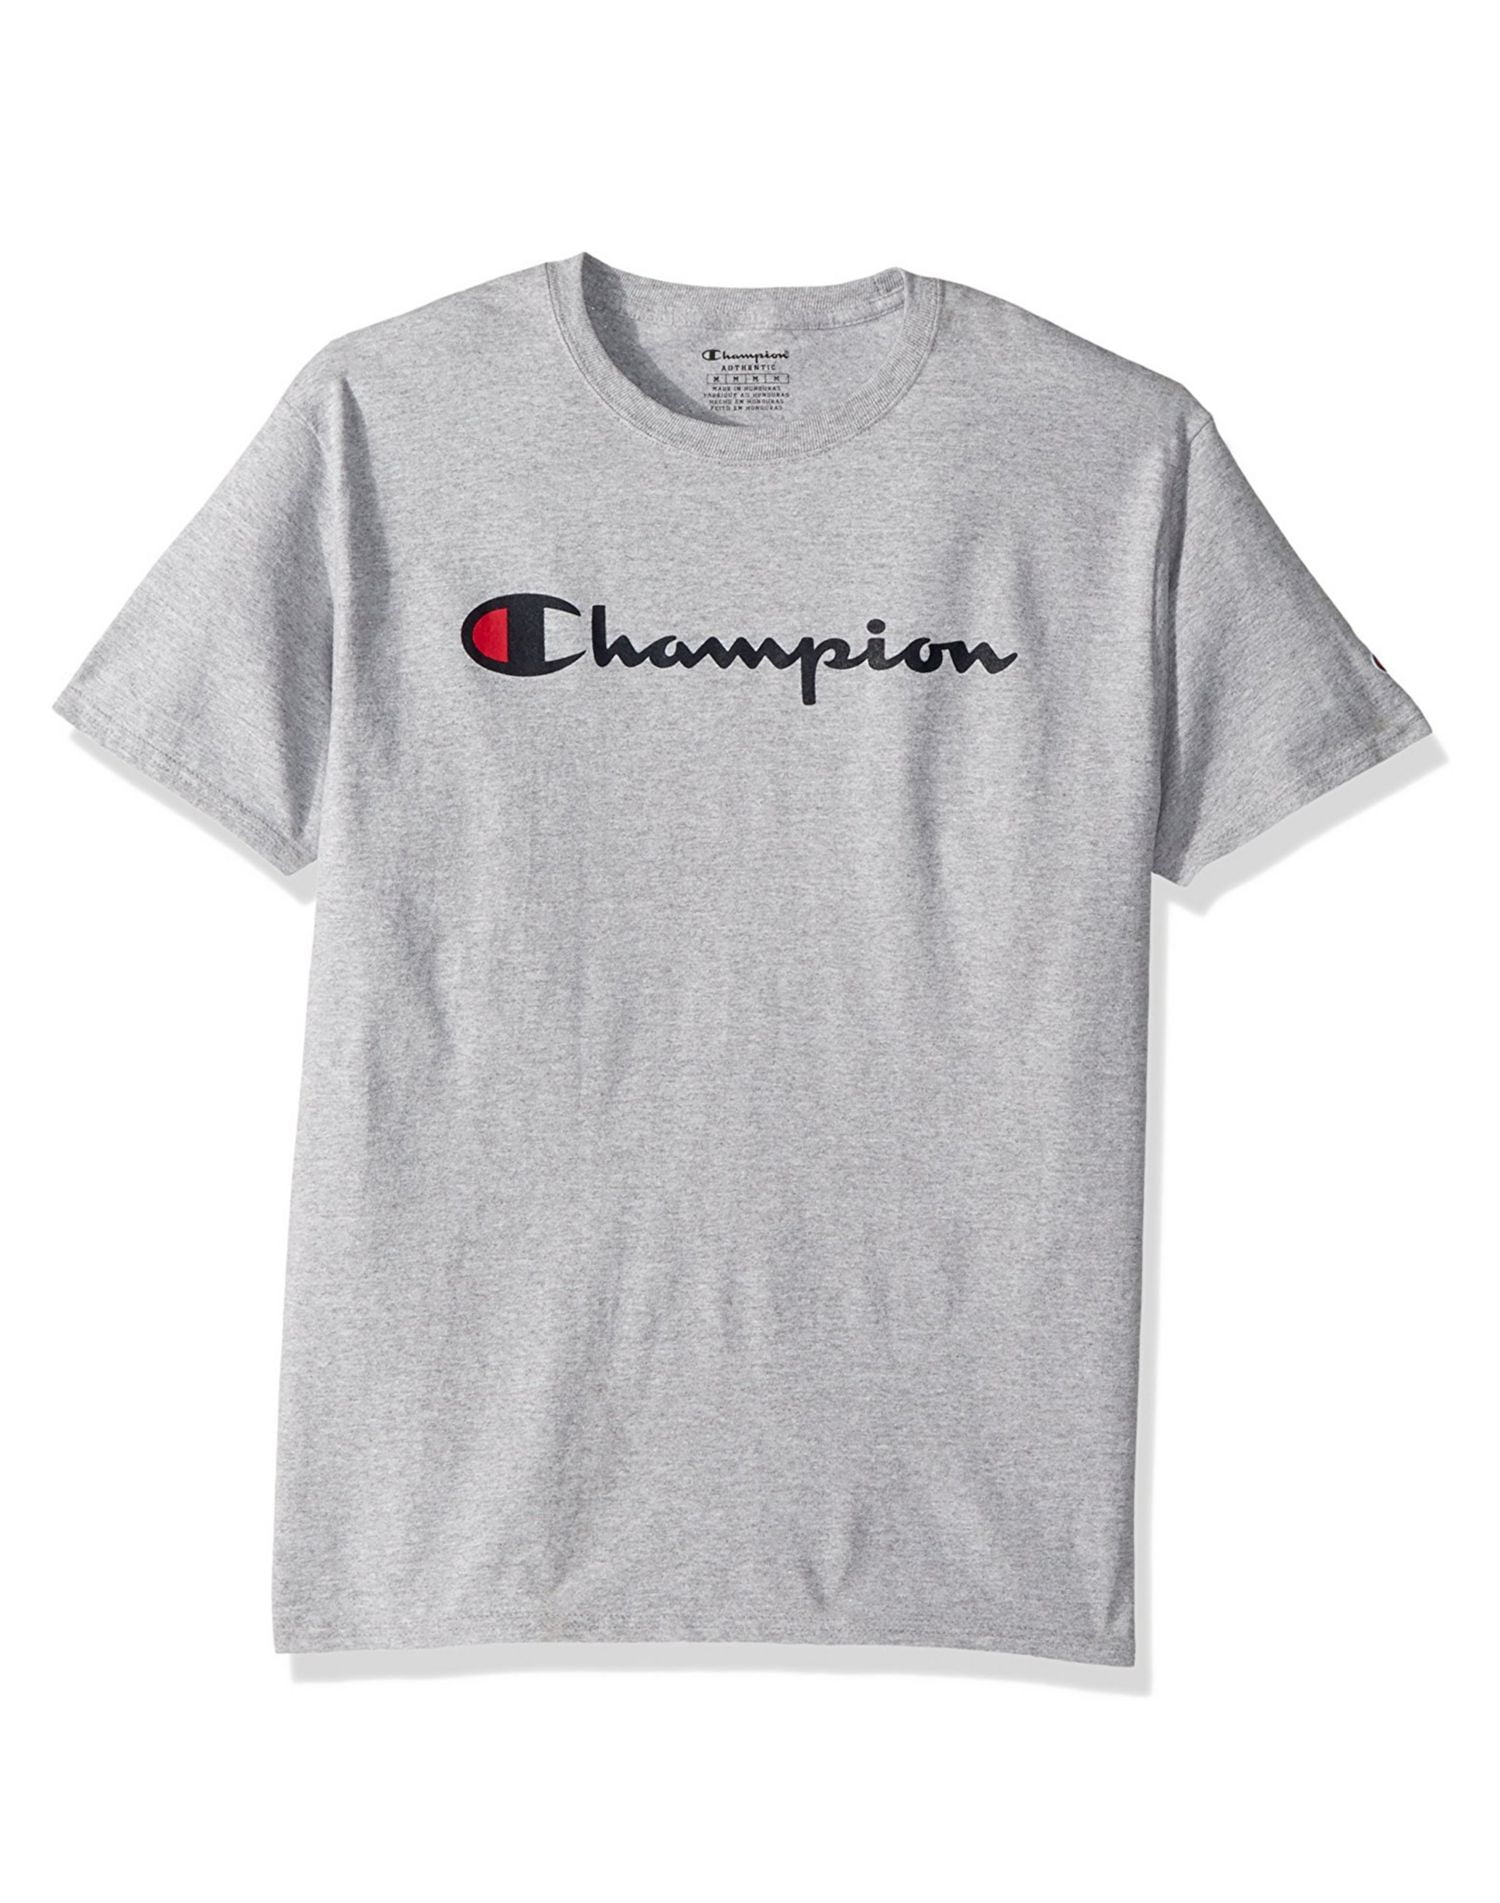 black champion shirt boys